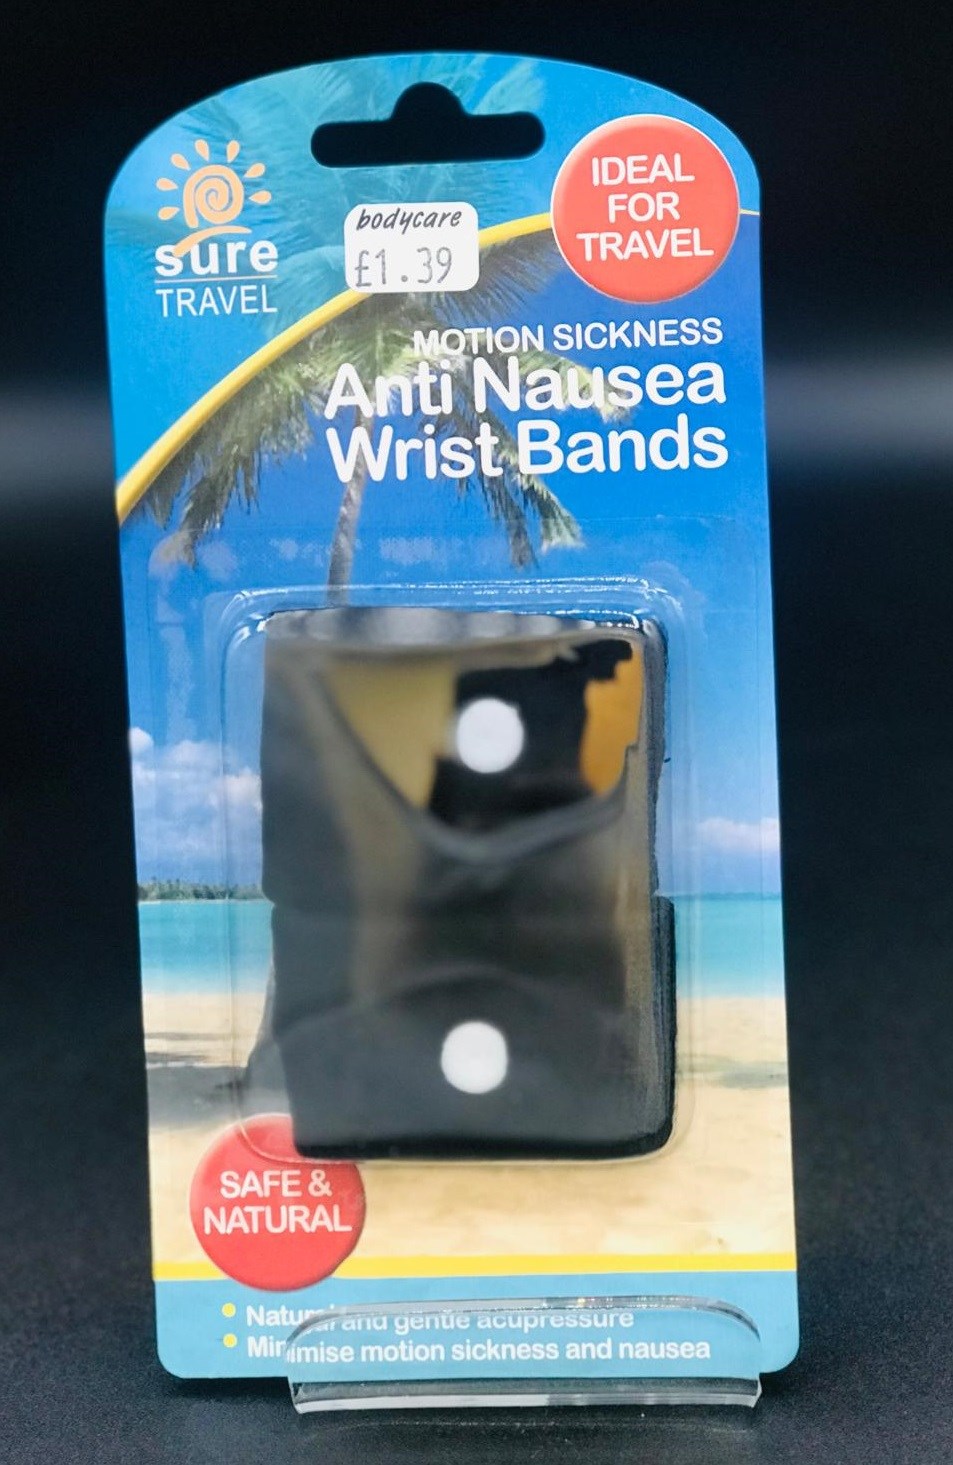 Sure Travel Anti-Nausea Wrist Band £1.39